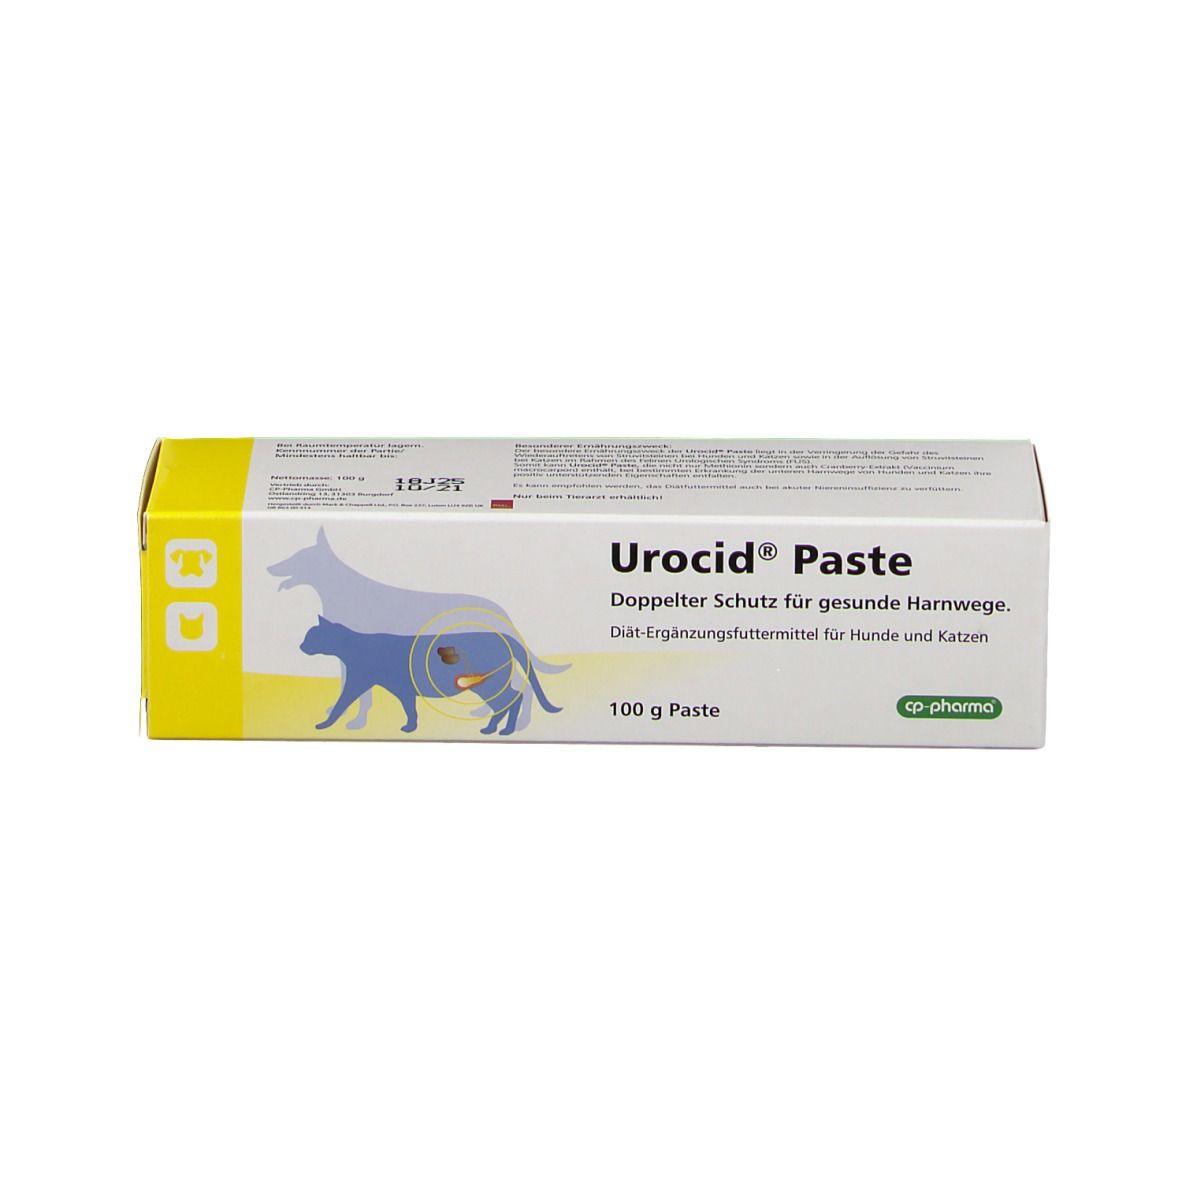 Urocid® Paste